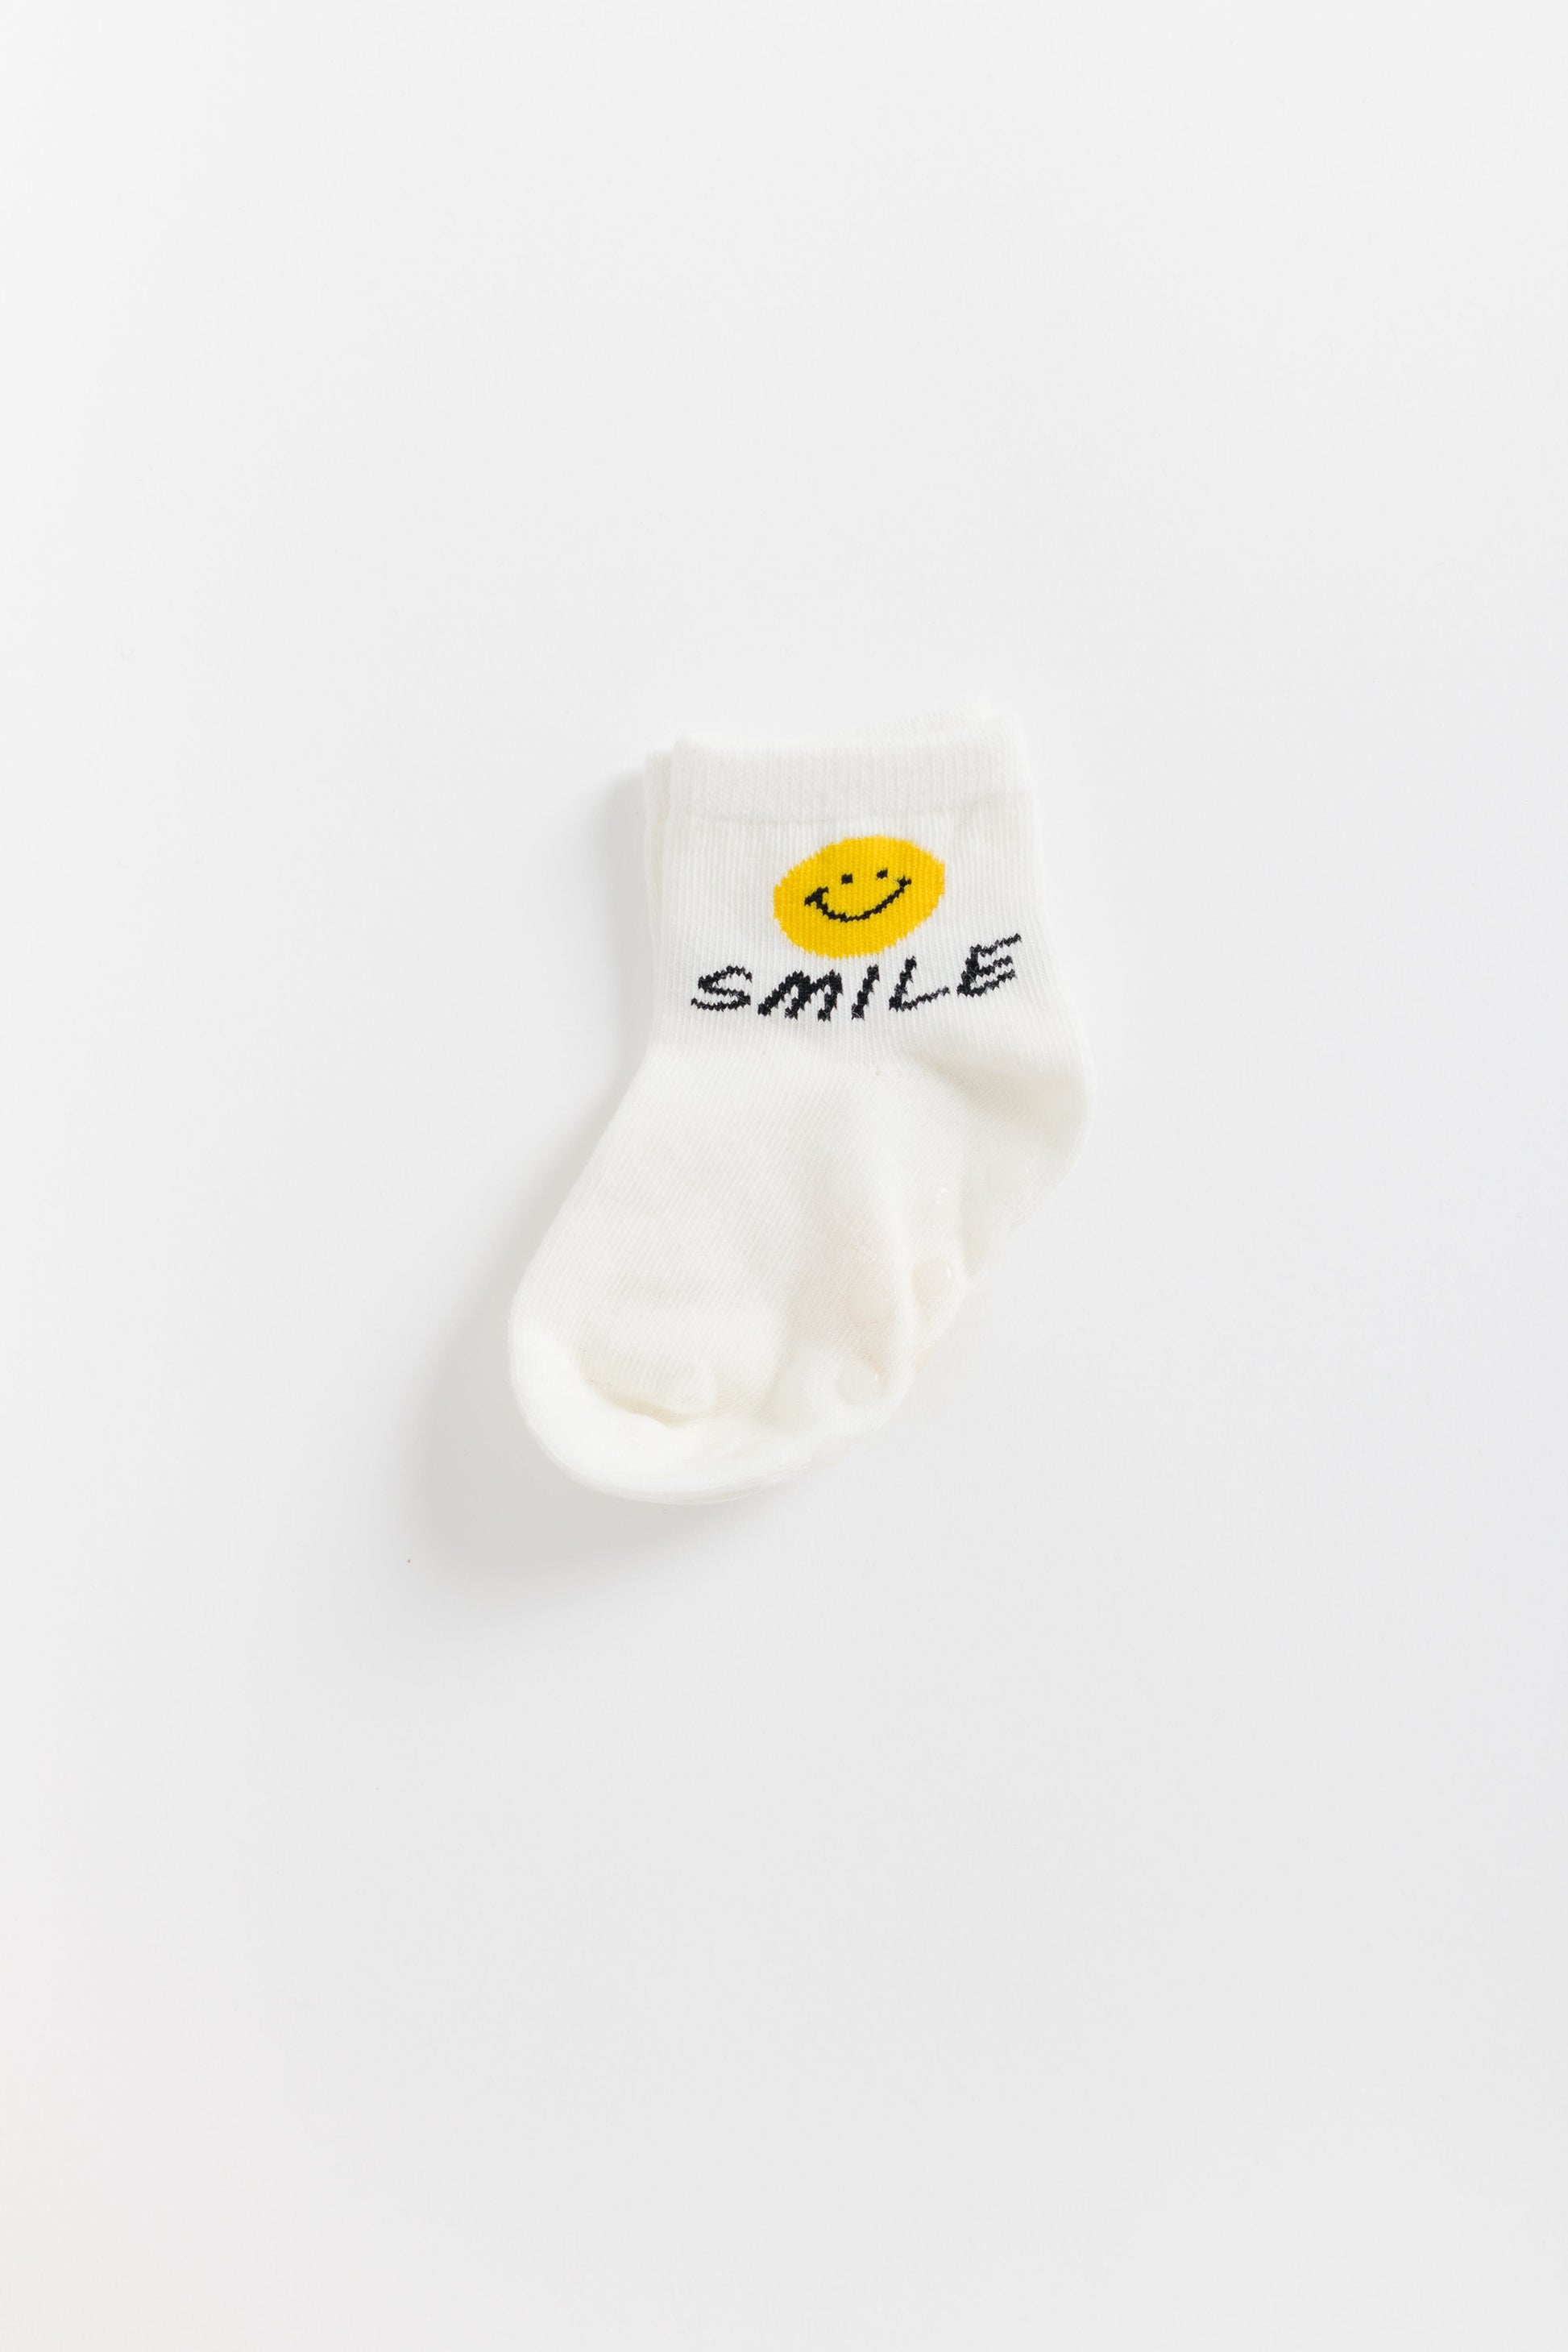 Cove Kids Quarter Smiley Socks KID'S SOCKS Cove Accessories 